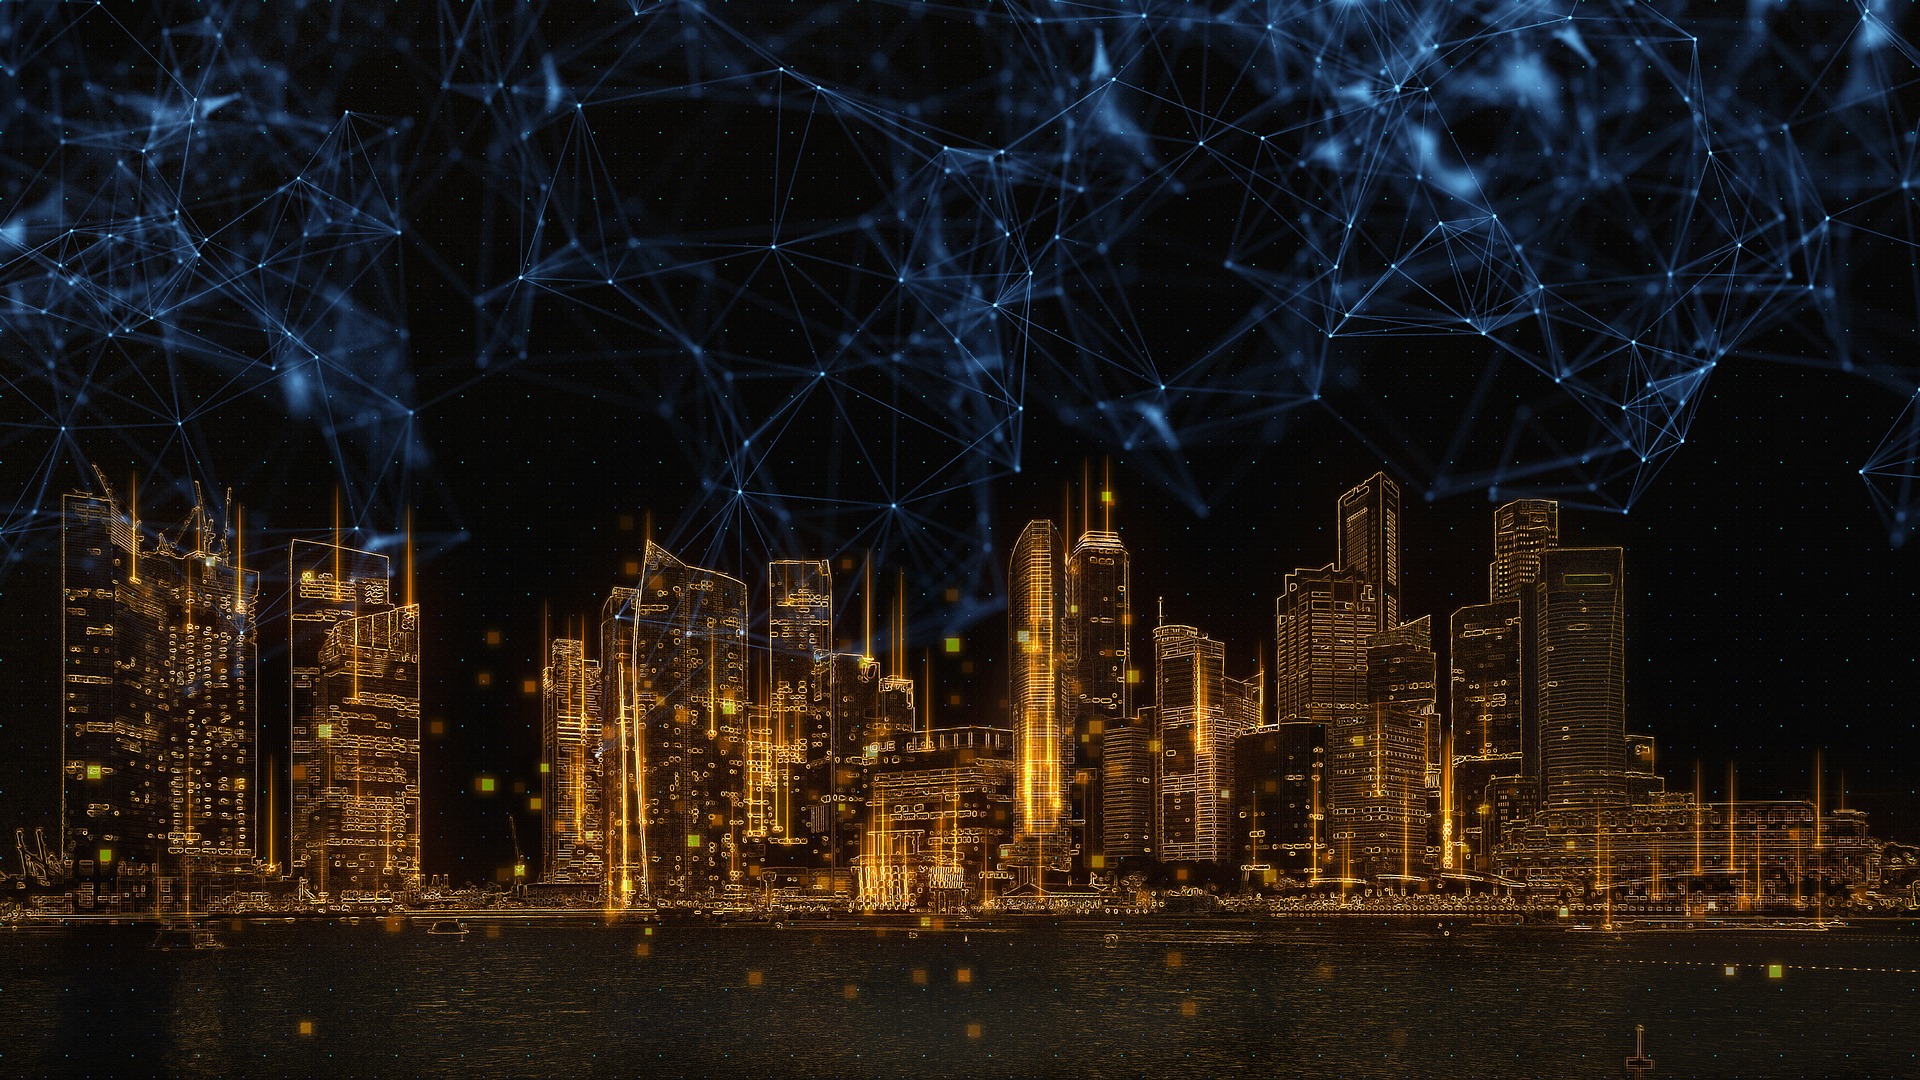 representation of a smart city using IoT technologies